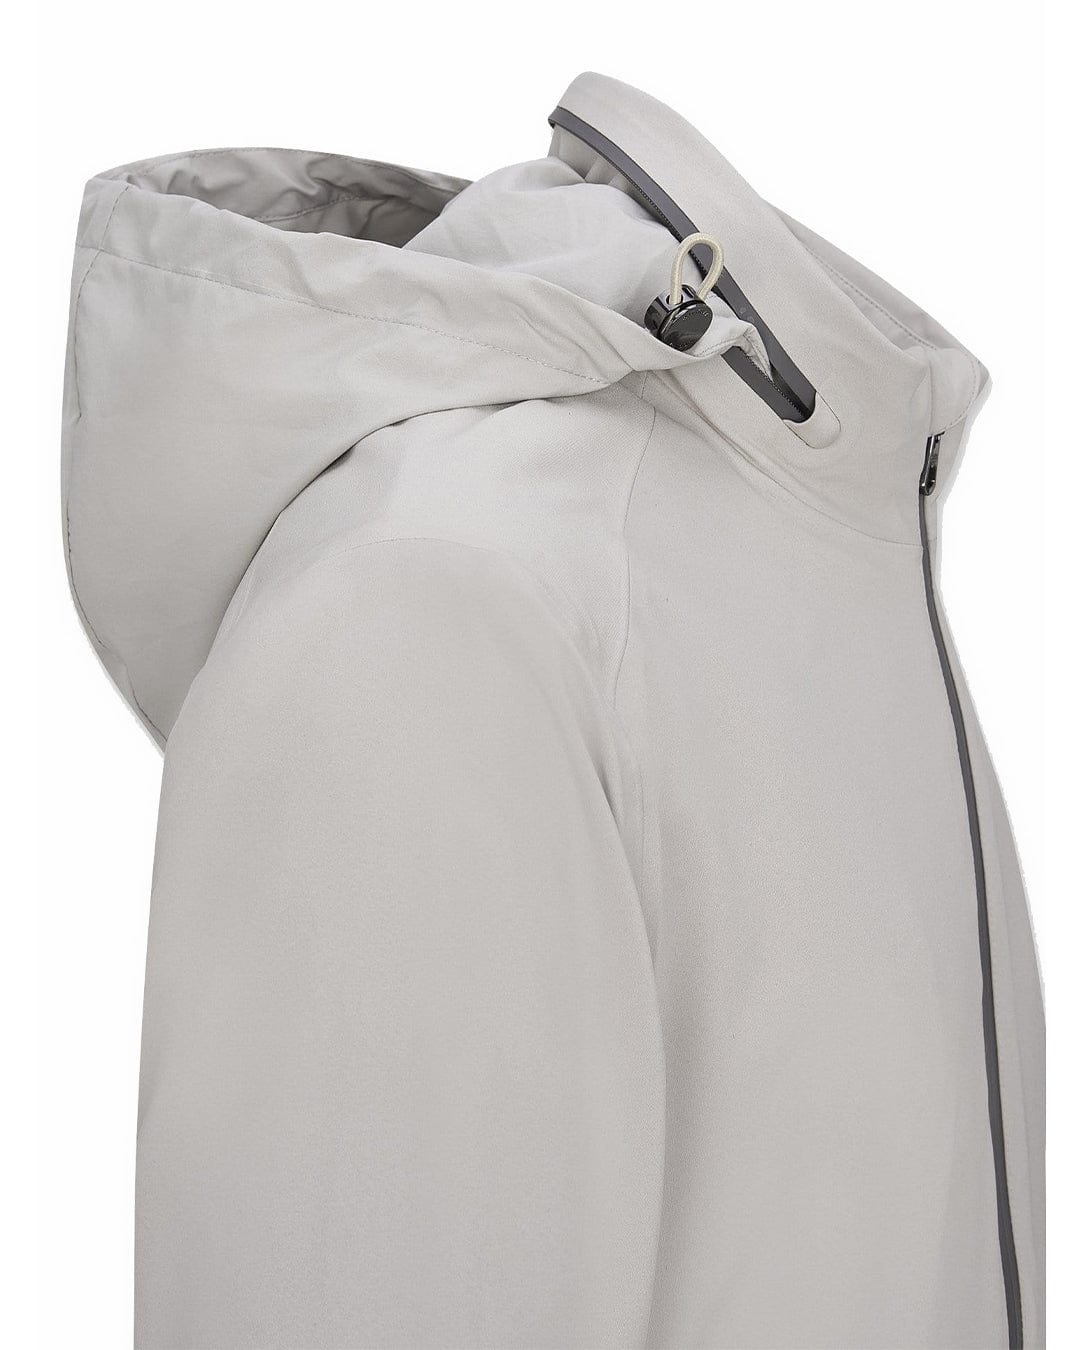 Hackett Outerwear Hackett White Soft Jacket